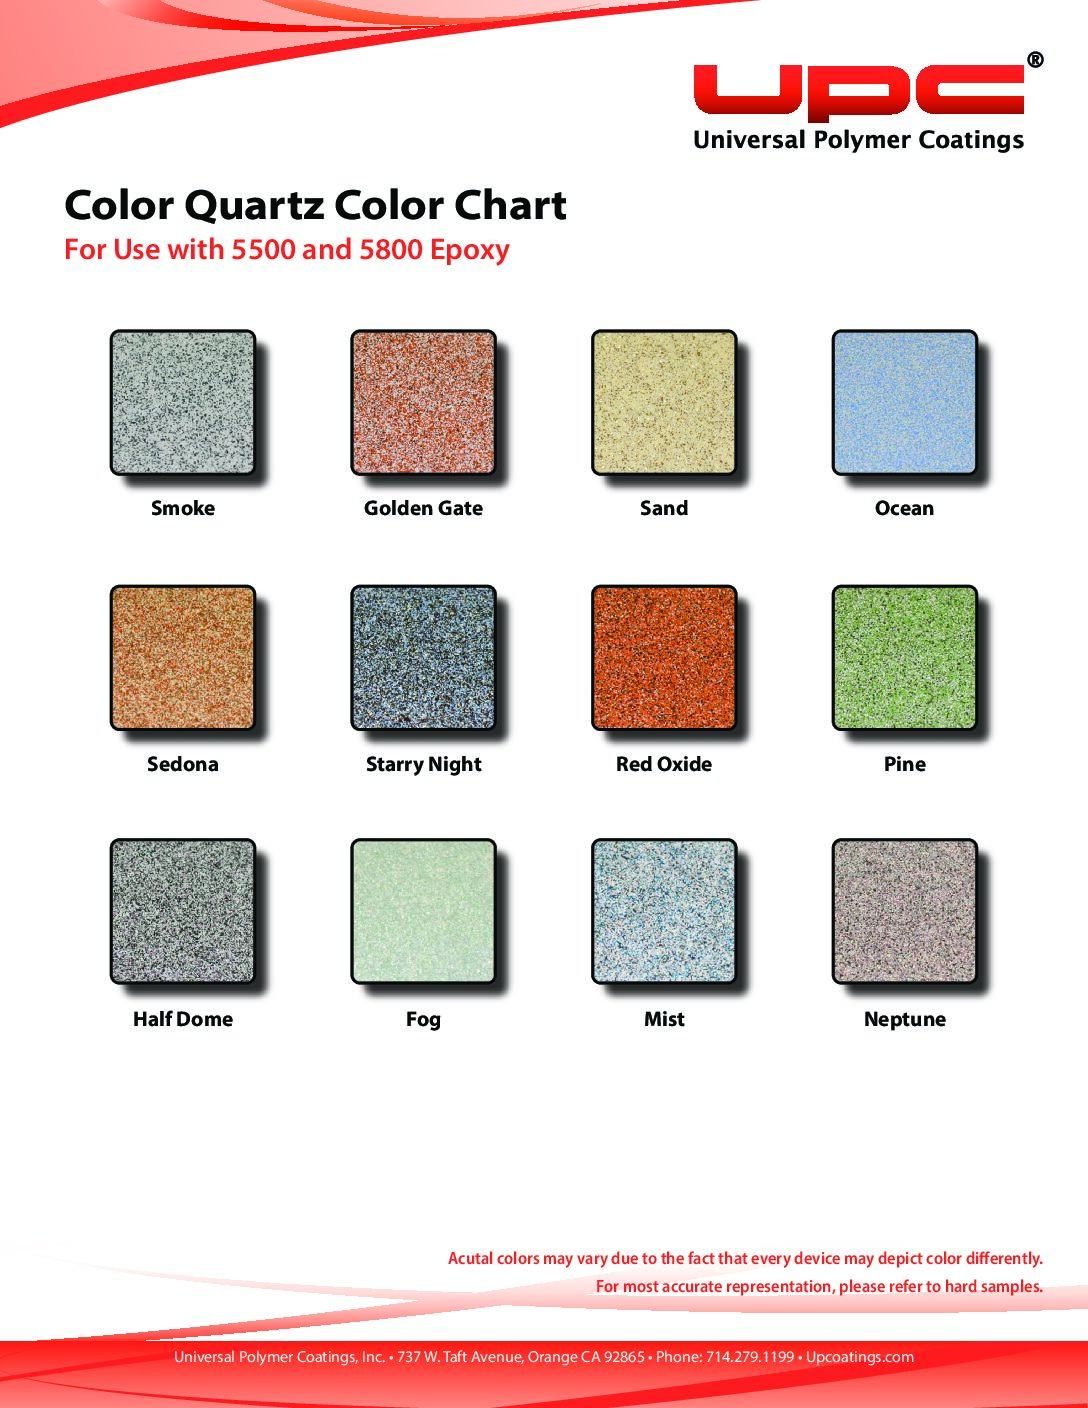 Color Quartz Color Chart Universal Polymer Coatings